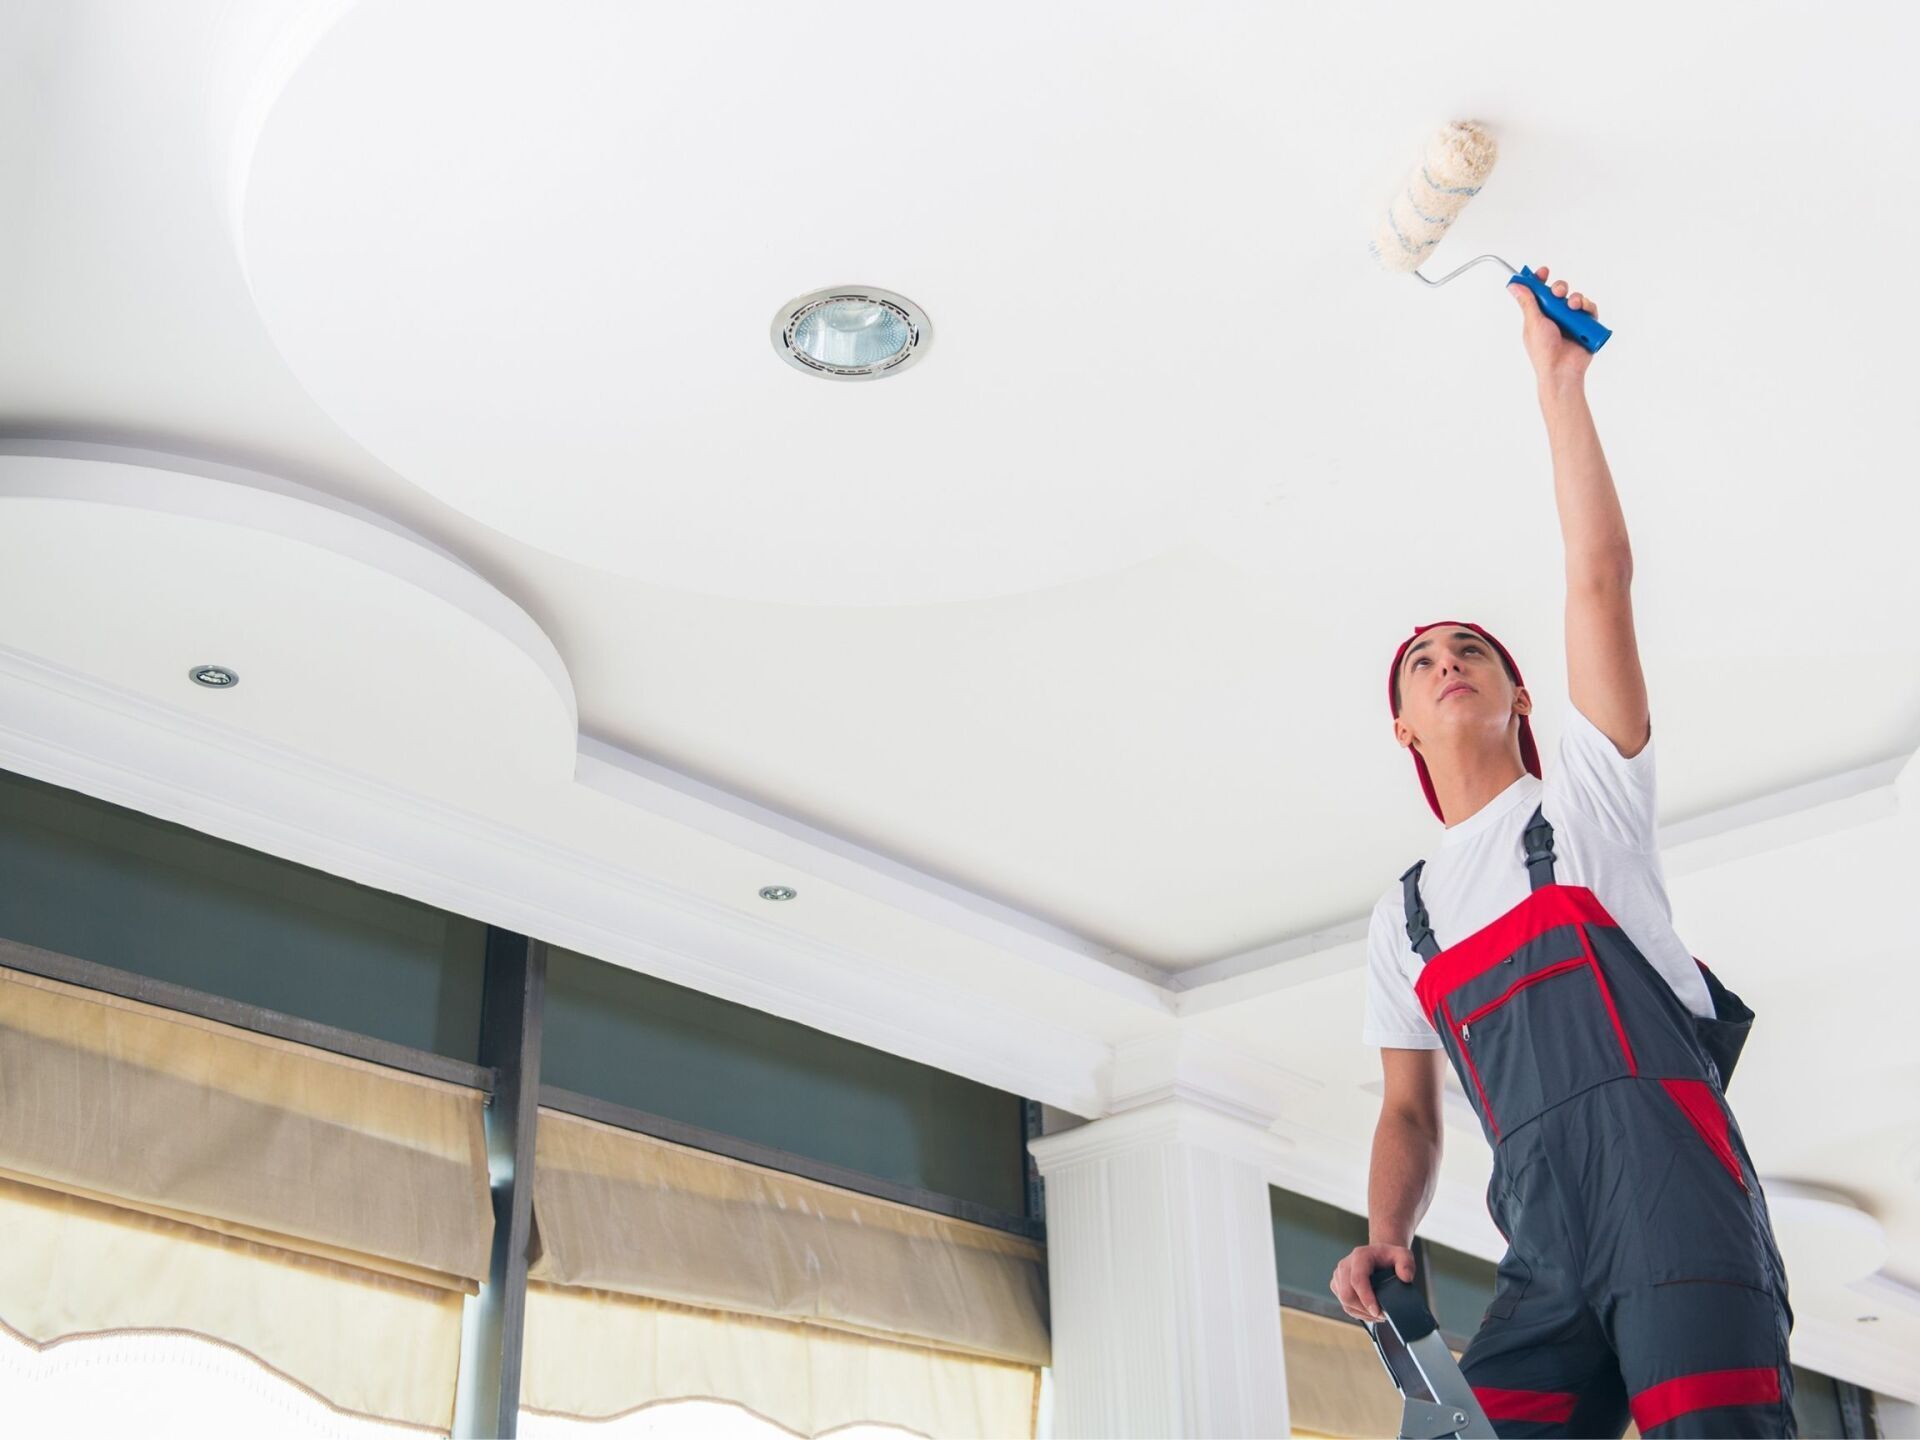 stipple ceiling removal ottawa